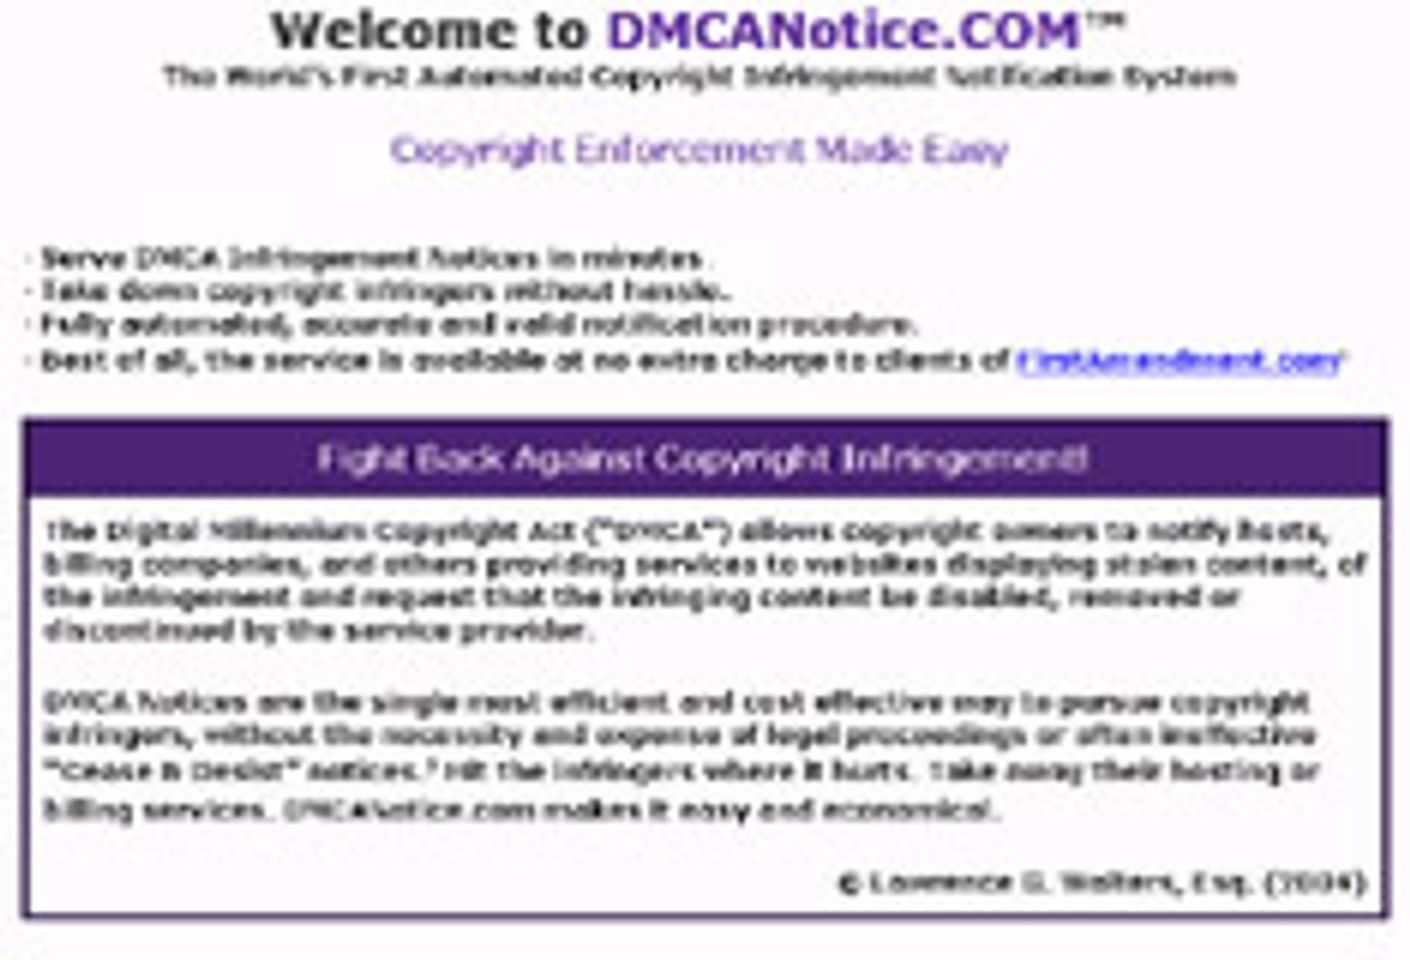 A New Automated Copyright Enforcement Tool: DMCANotice.com